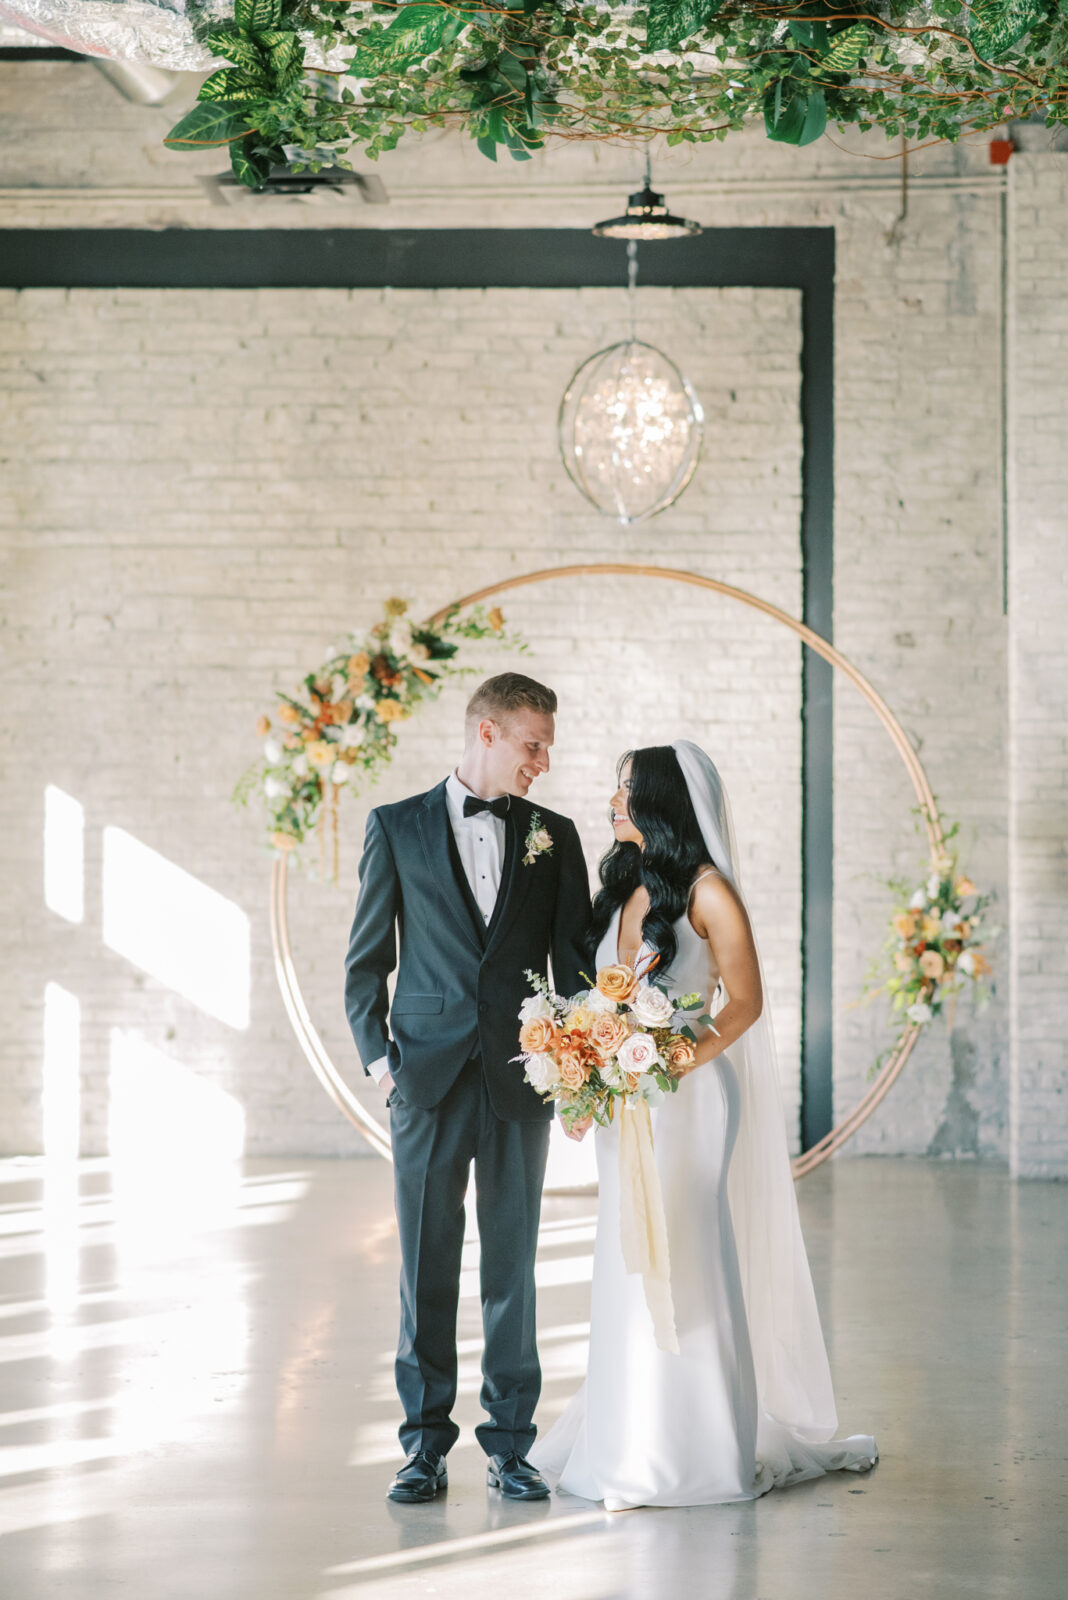 Bride and groom portraits in industrial wedding venue, unique circular arch design inspiration, fall-colour palette